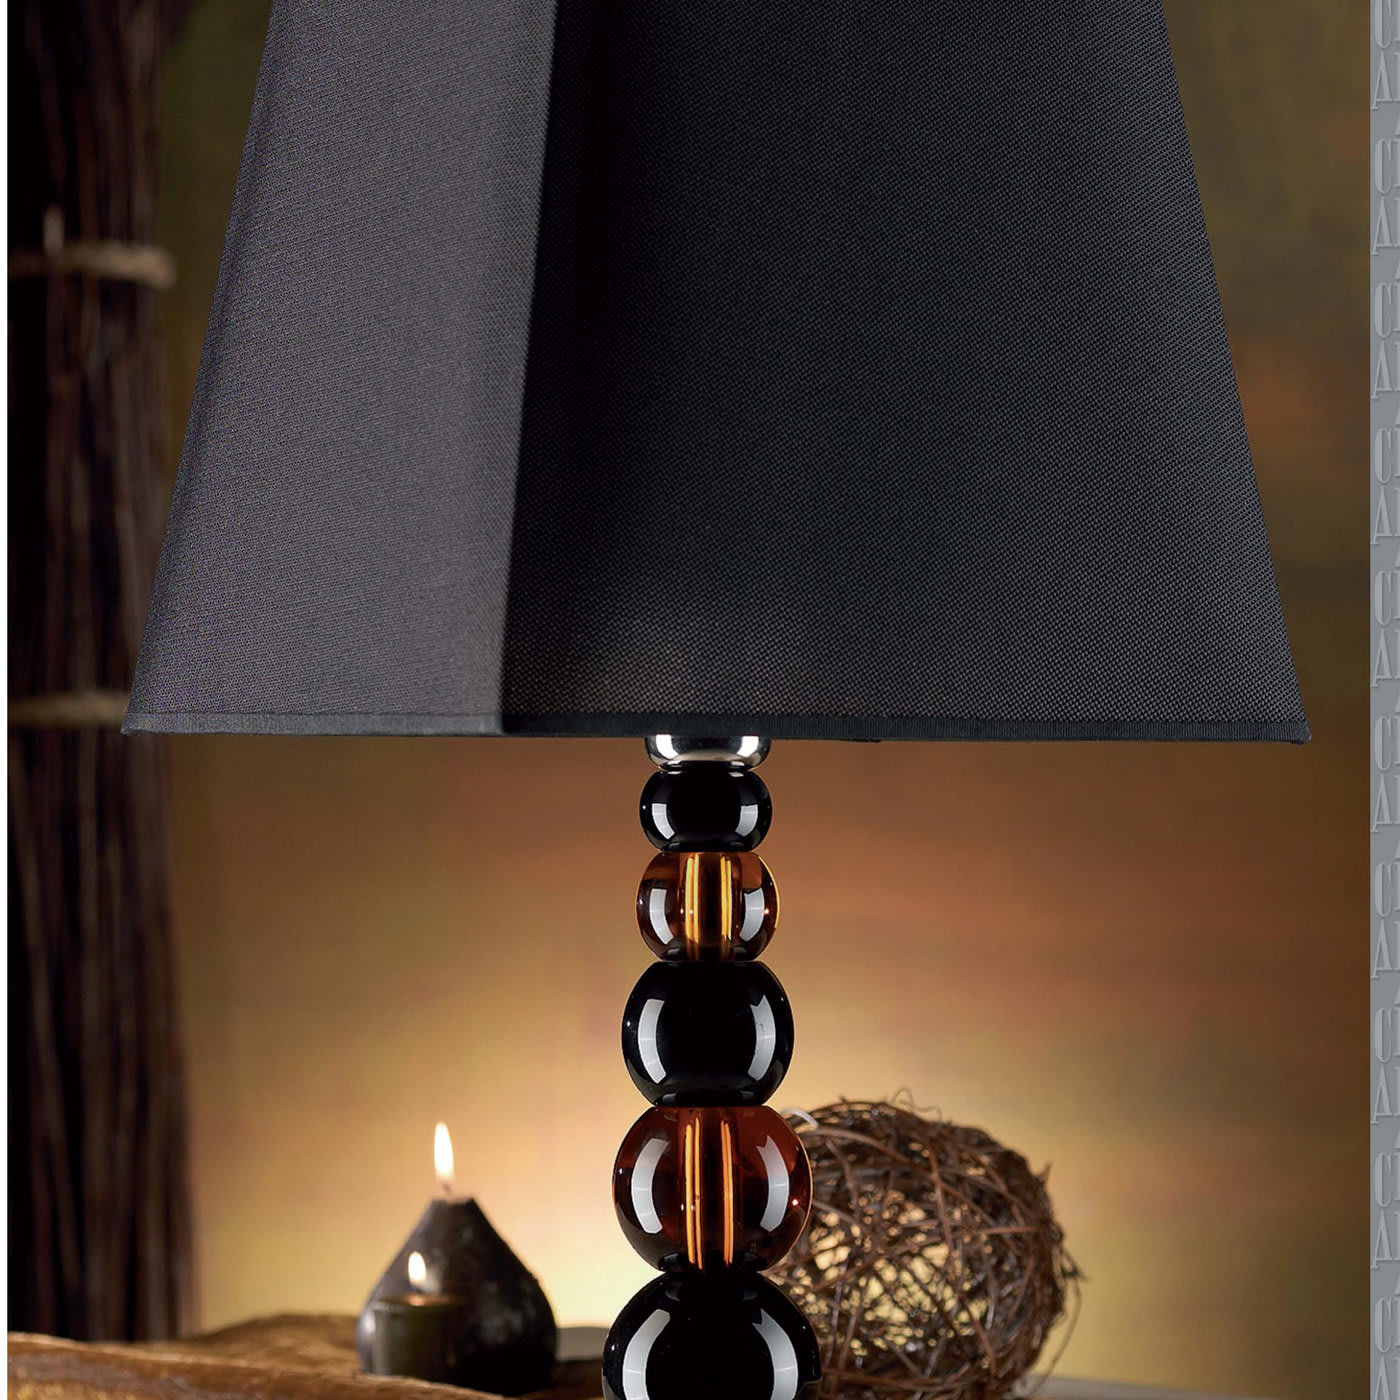 Flairy Lamp - Creart